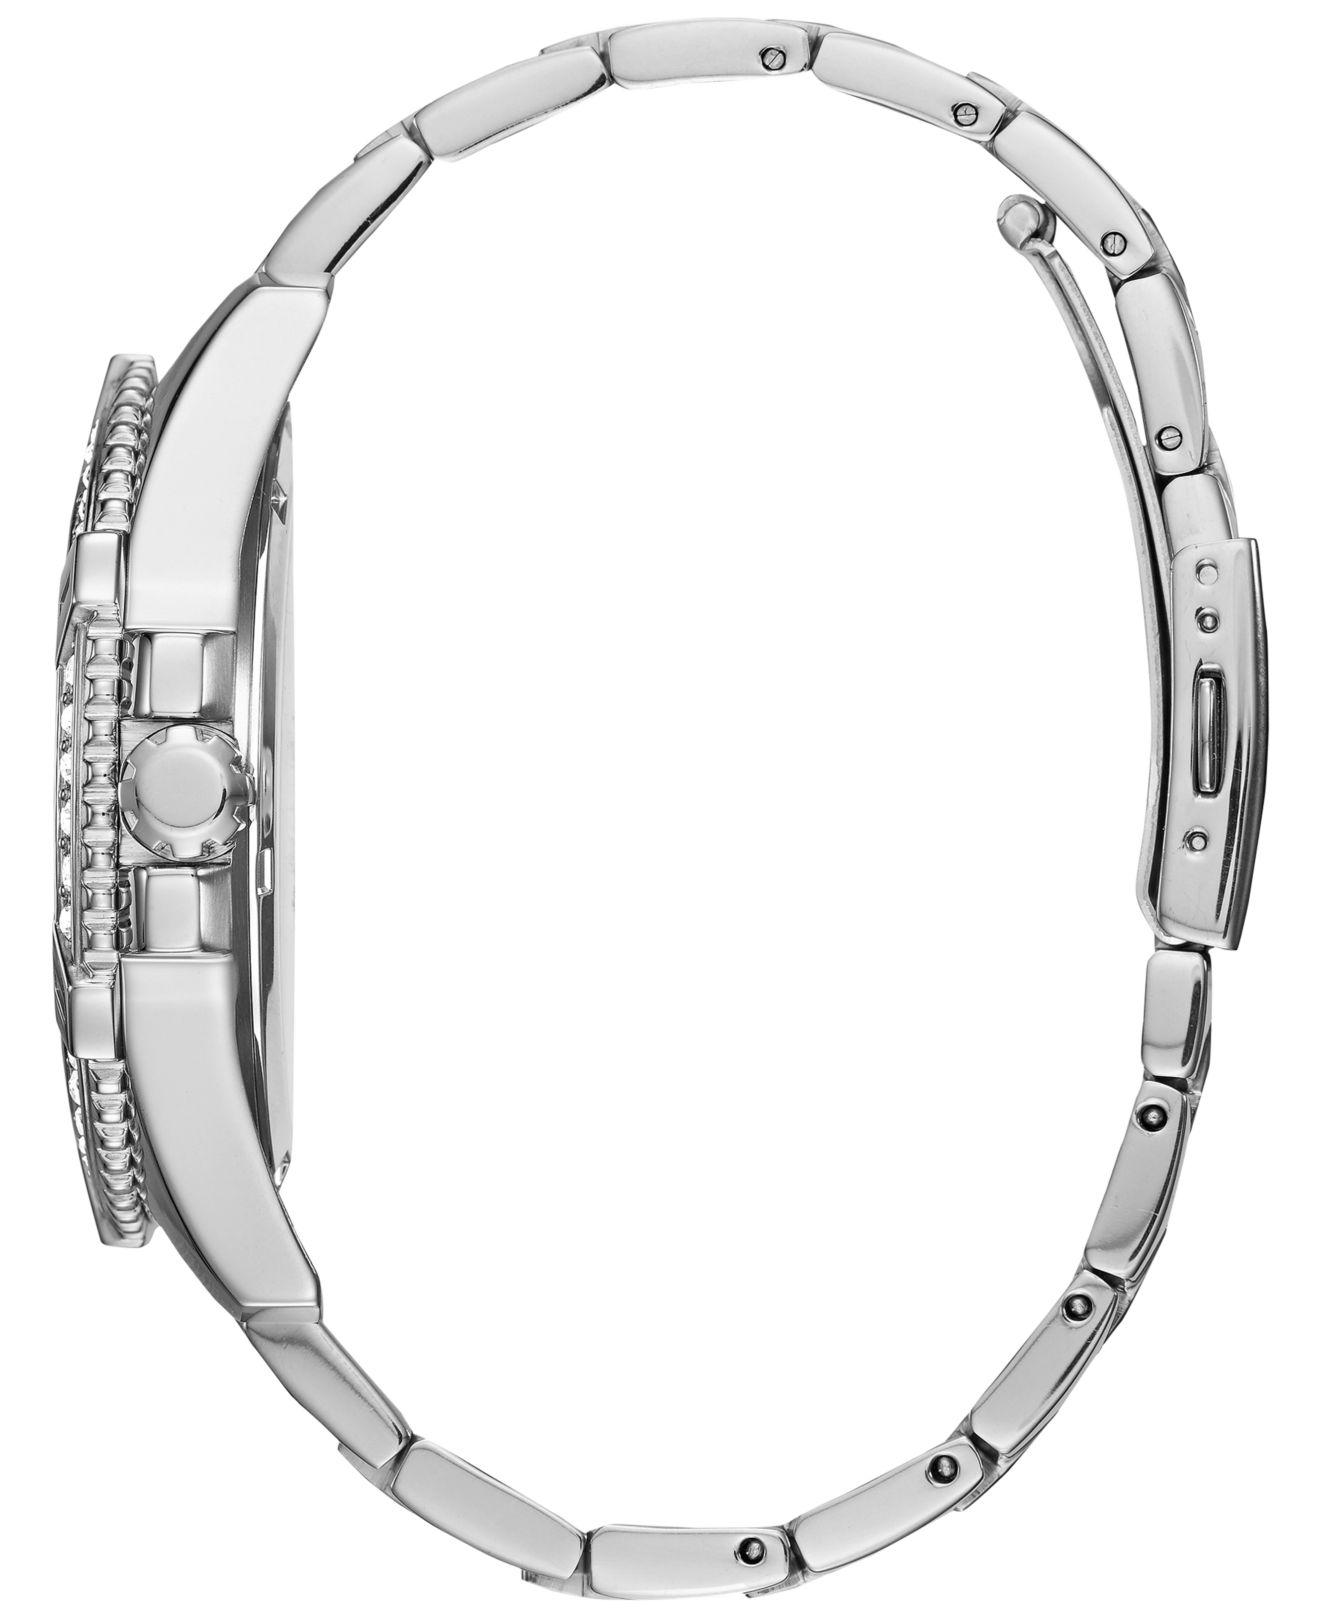 Guess Men's Stainless Steel Bracelet Watch 50mm U0799g1 in Silver-Tone  (Metallic) - Save 48% | Lyst